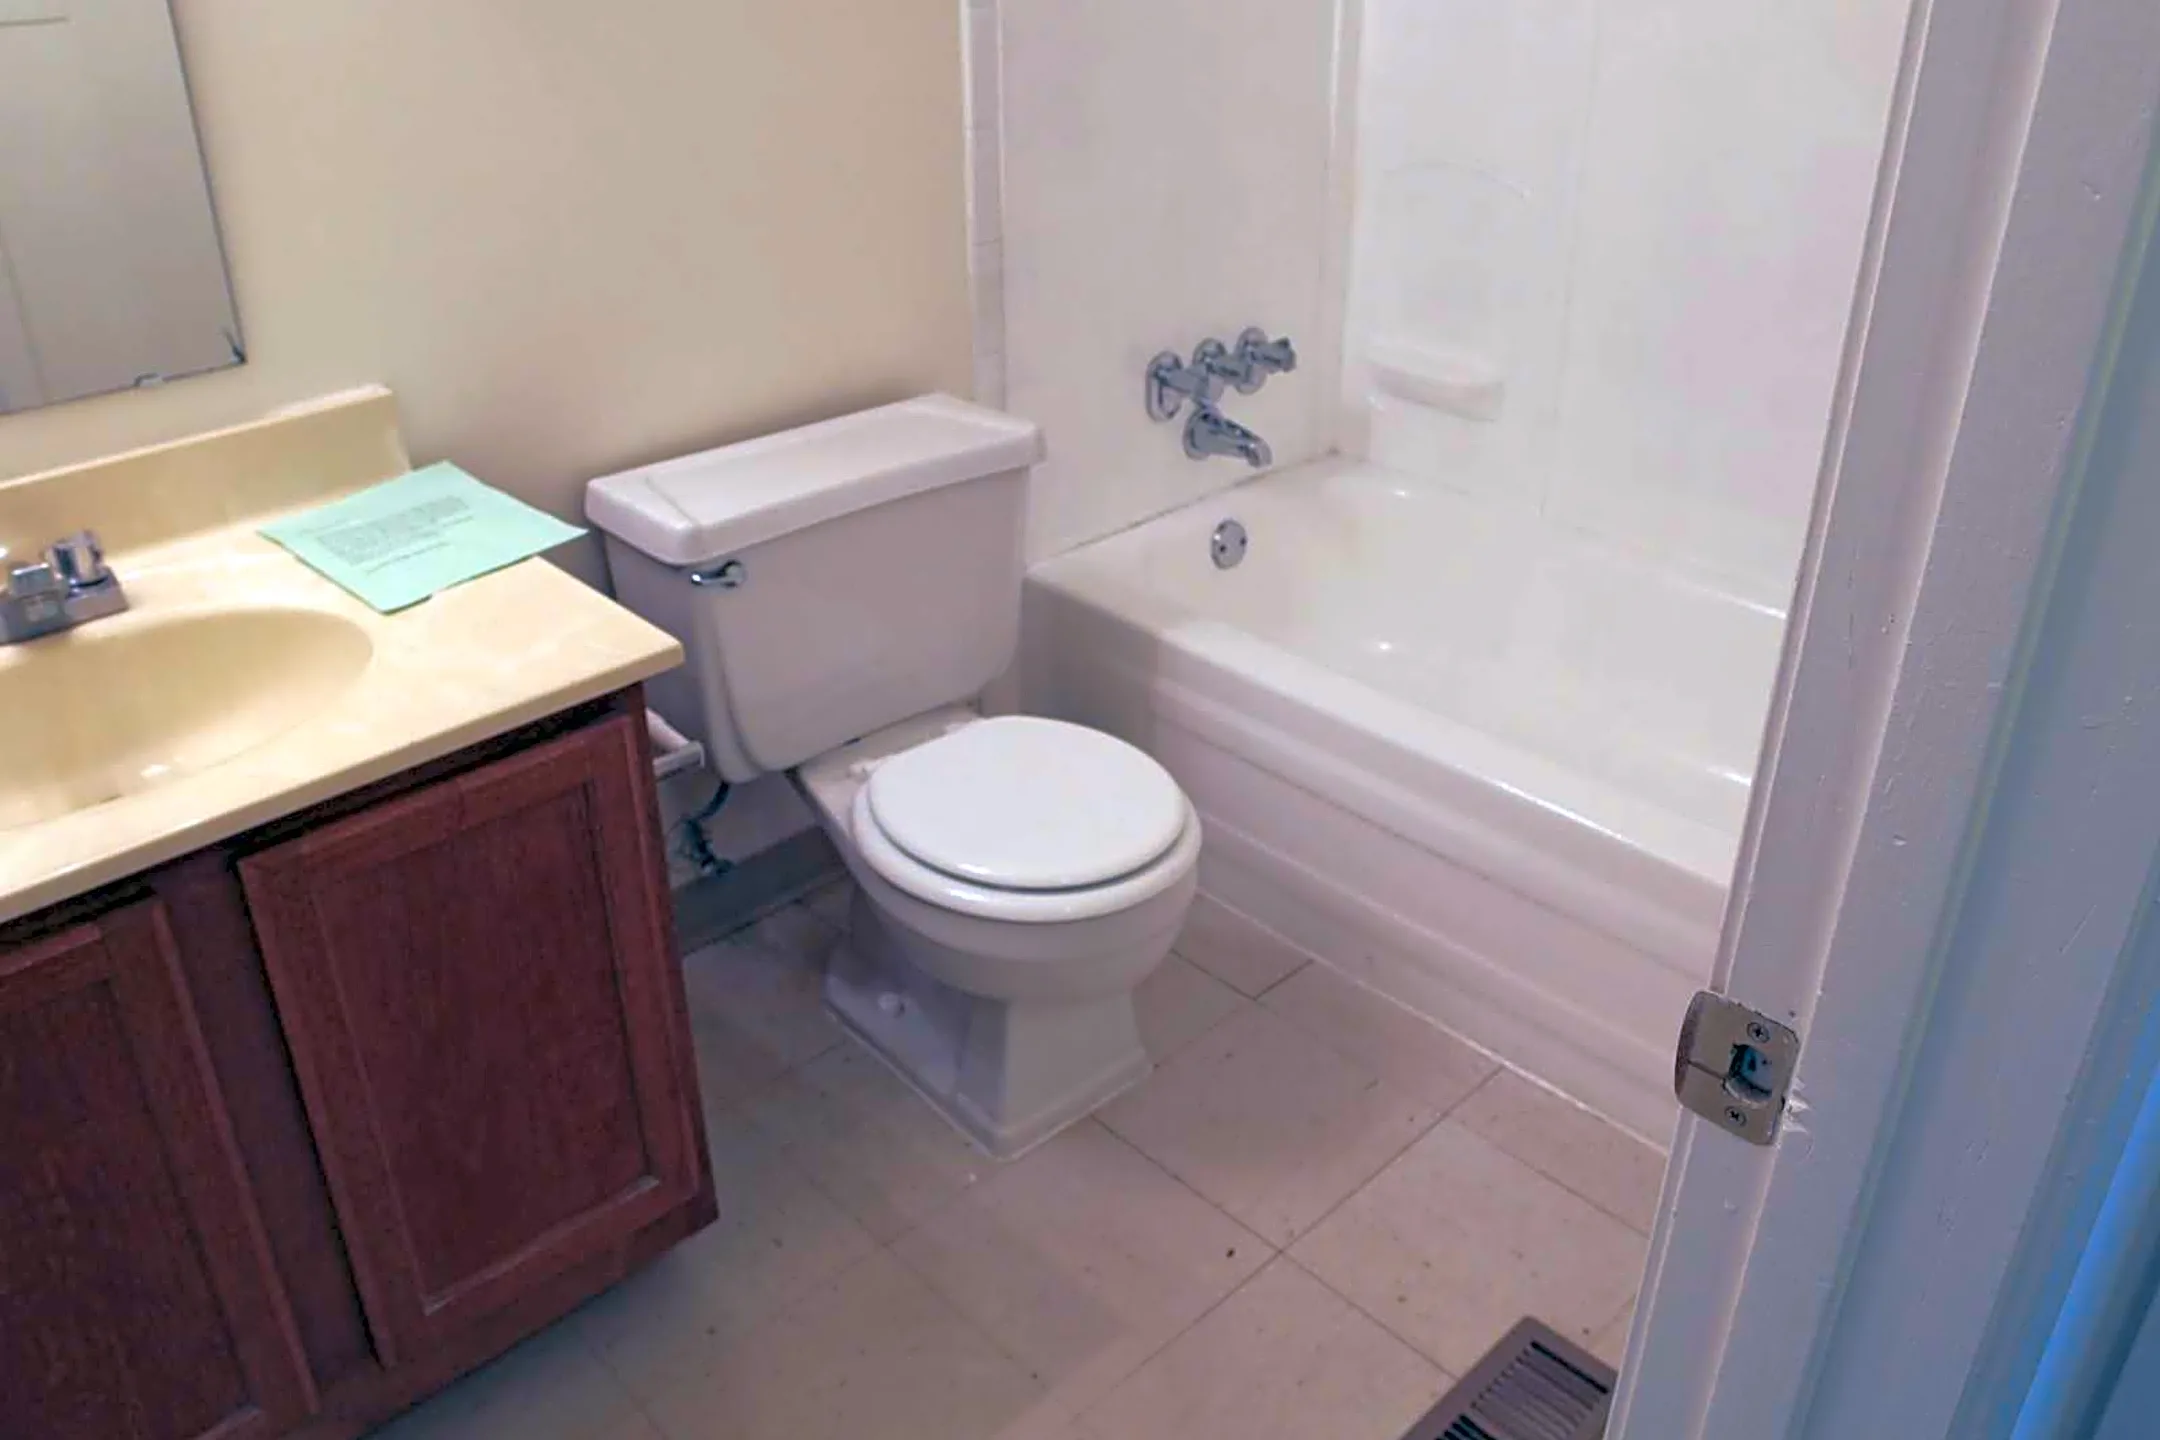 Bathroom - Colonial Village Apartments - Clarksville, IN